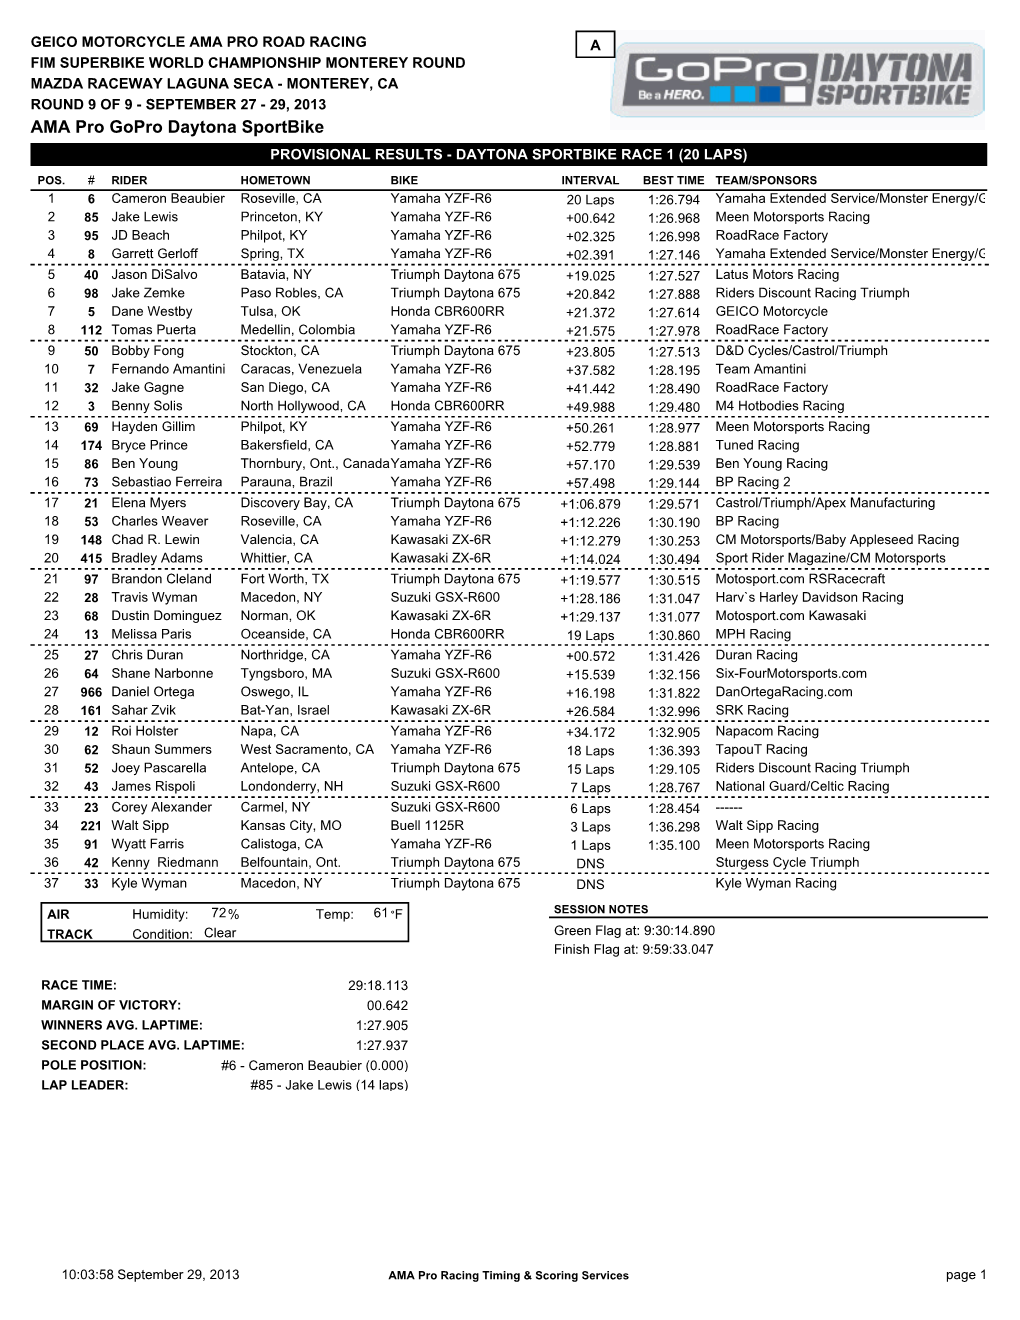 AMA Pro Gopro Daytona Sportbike PROVISIONAL RESULTS - DAYTONA SPORTBIKE RACE 1 (20 LAPS)